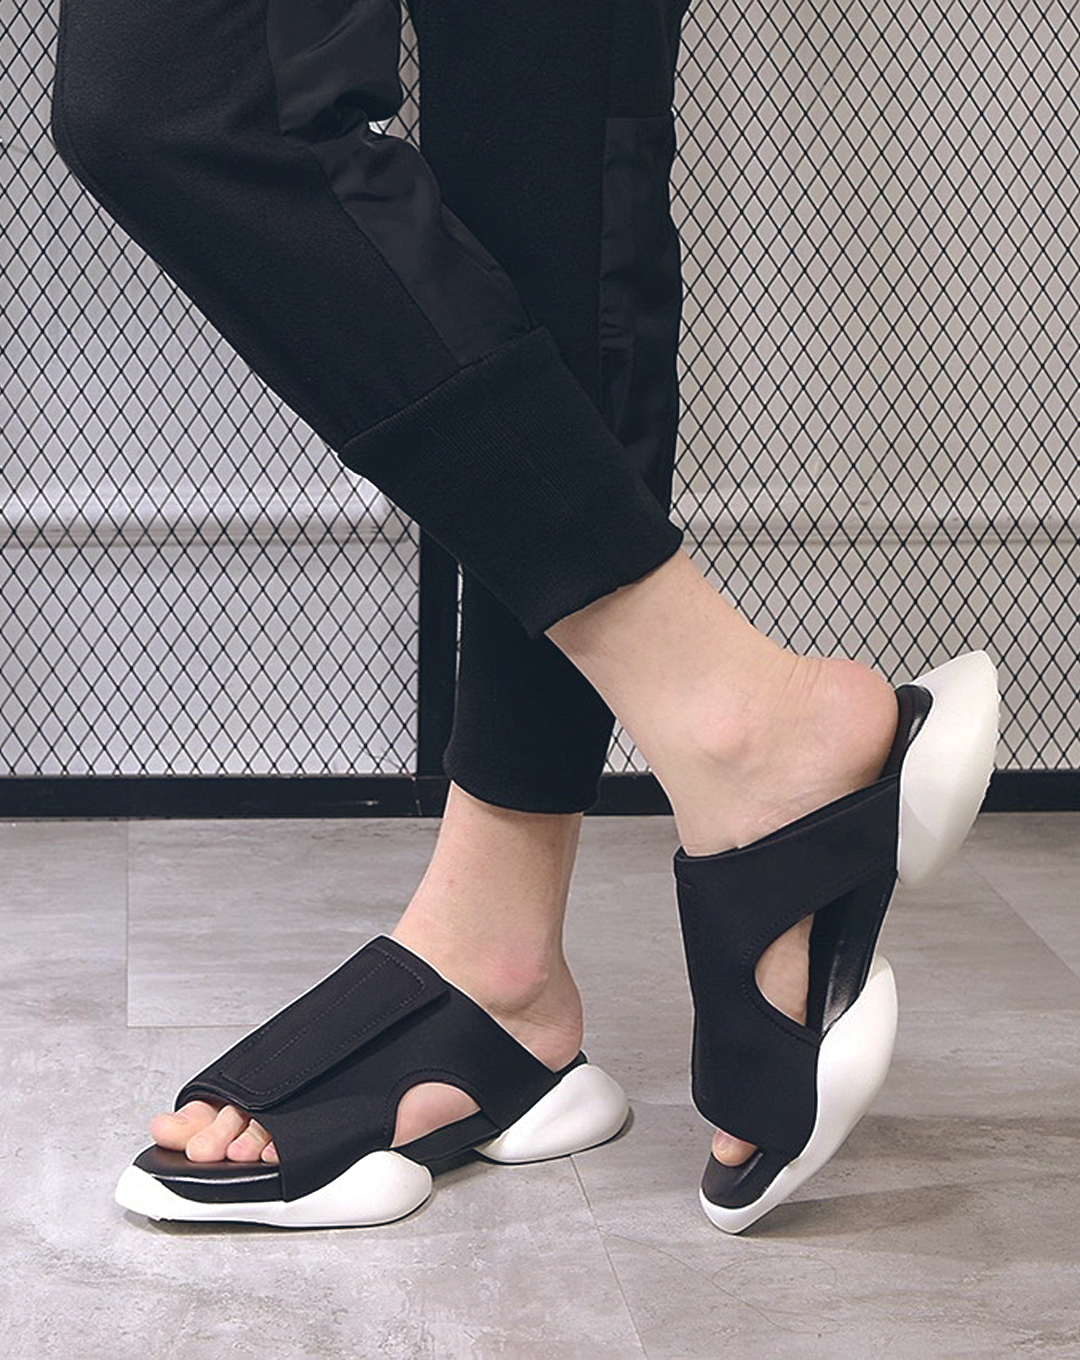 ♂♀Soft Sole Velcro Sandals